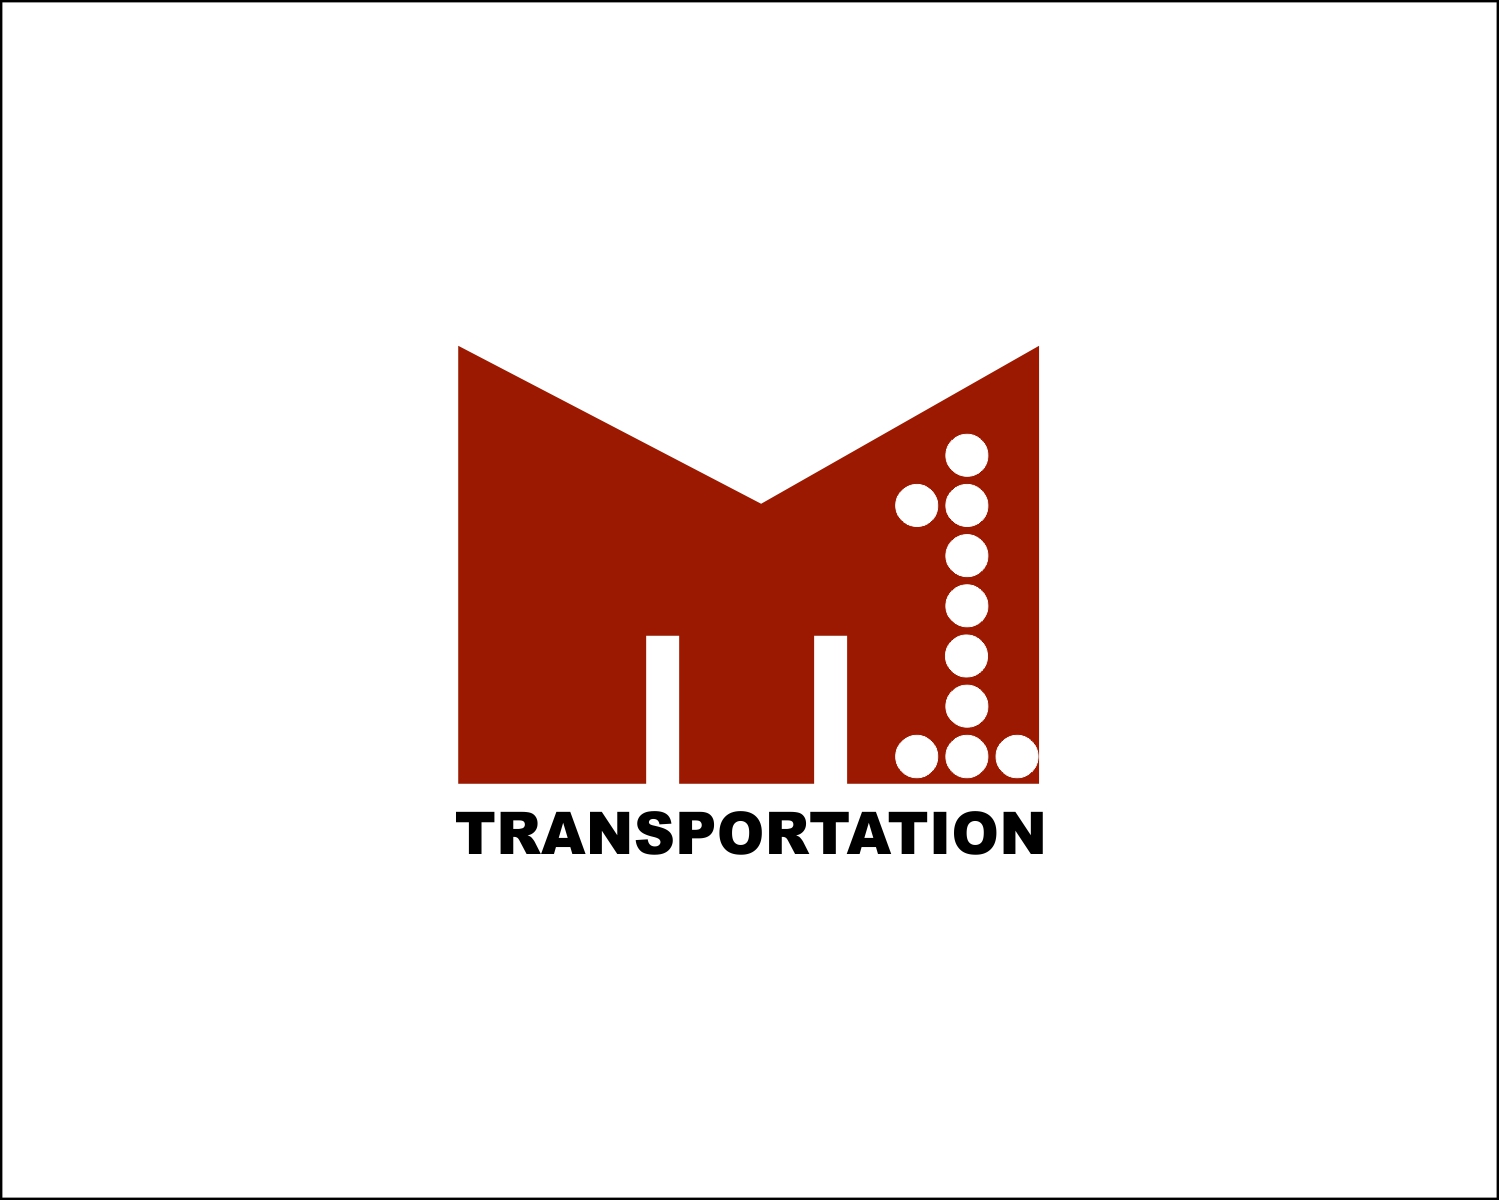 Logo Design Contest for M1 Transportation, M1 Transport, M1 Logistics ...